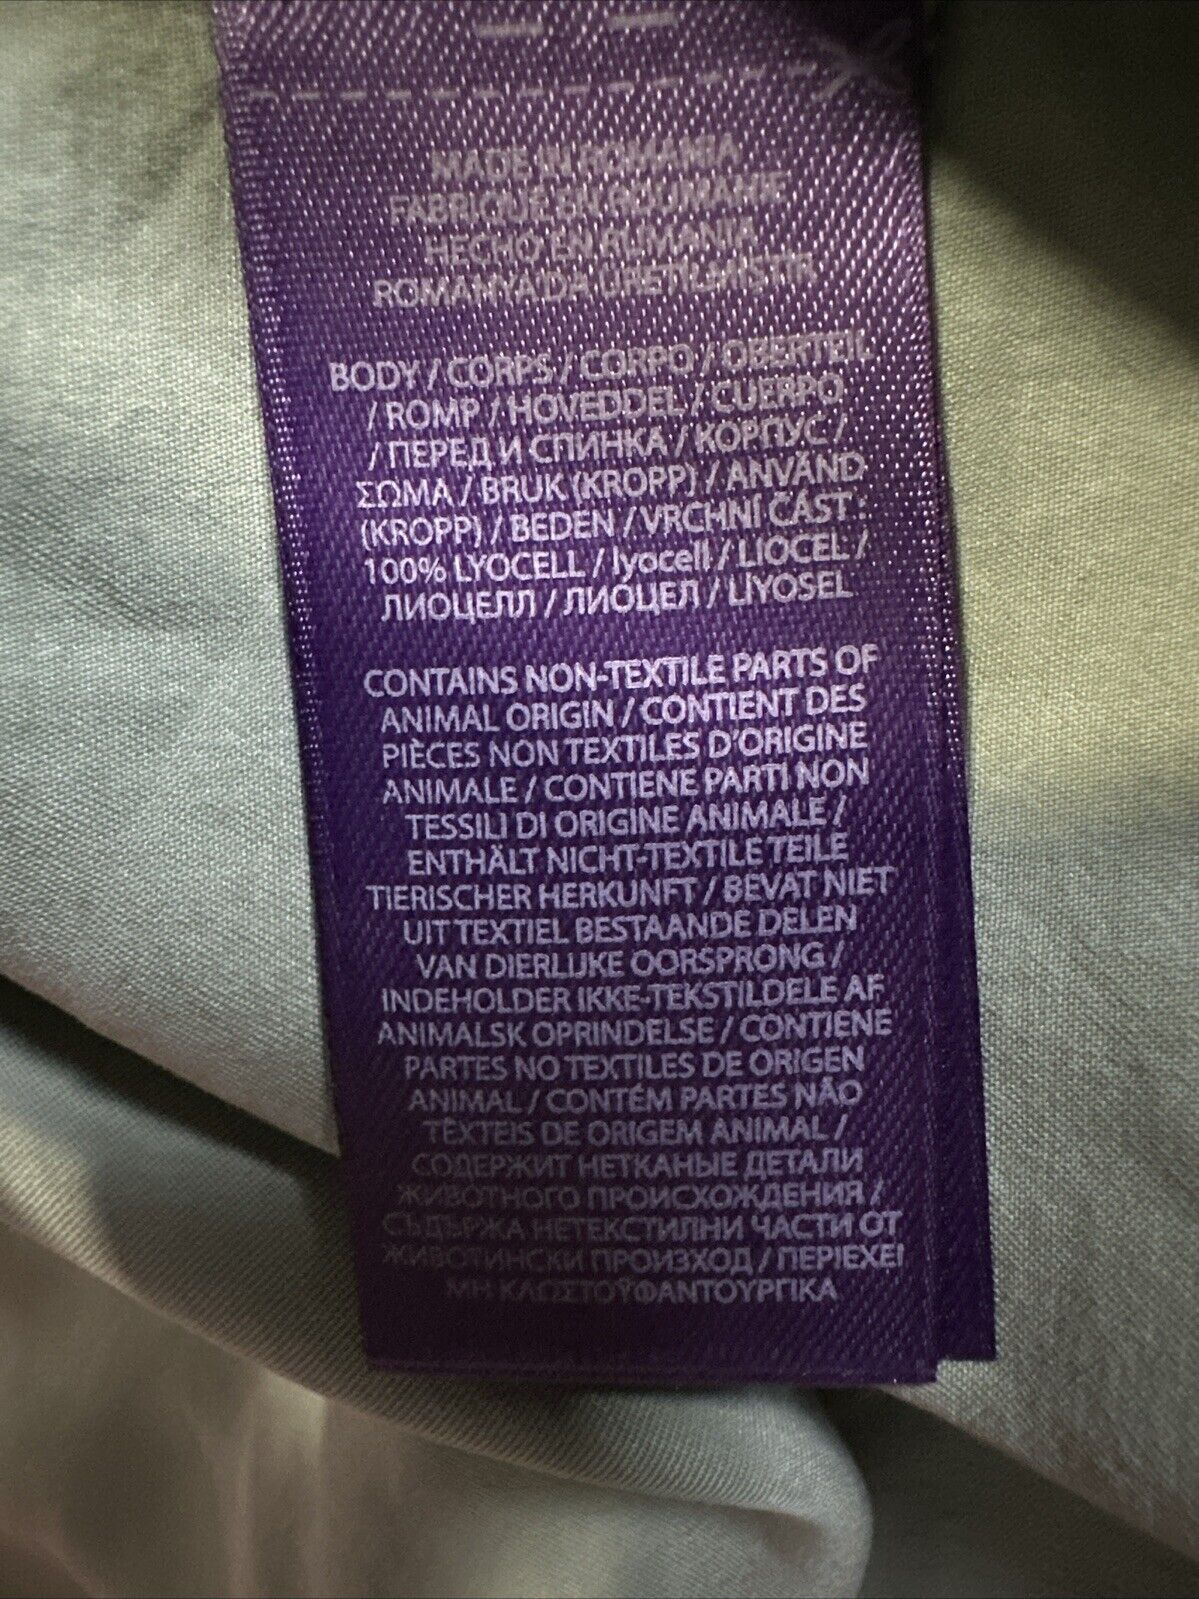 Ralph Lauren Purple Label Western Shirt Size M New $595